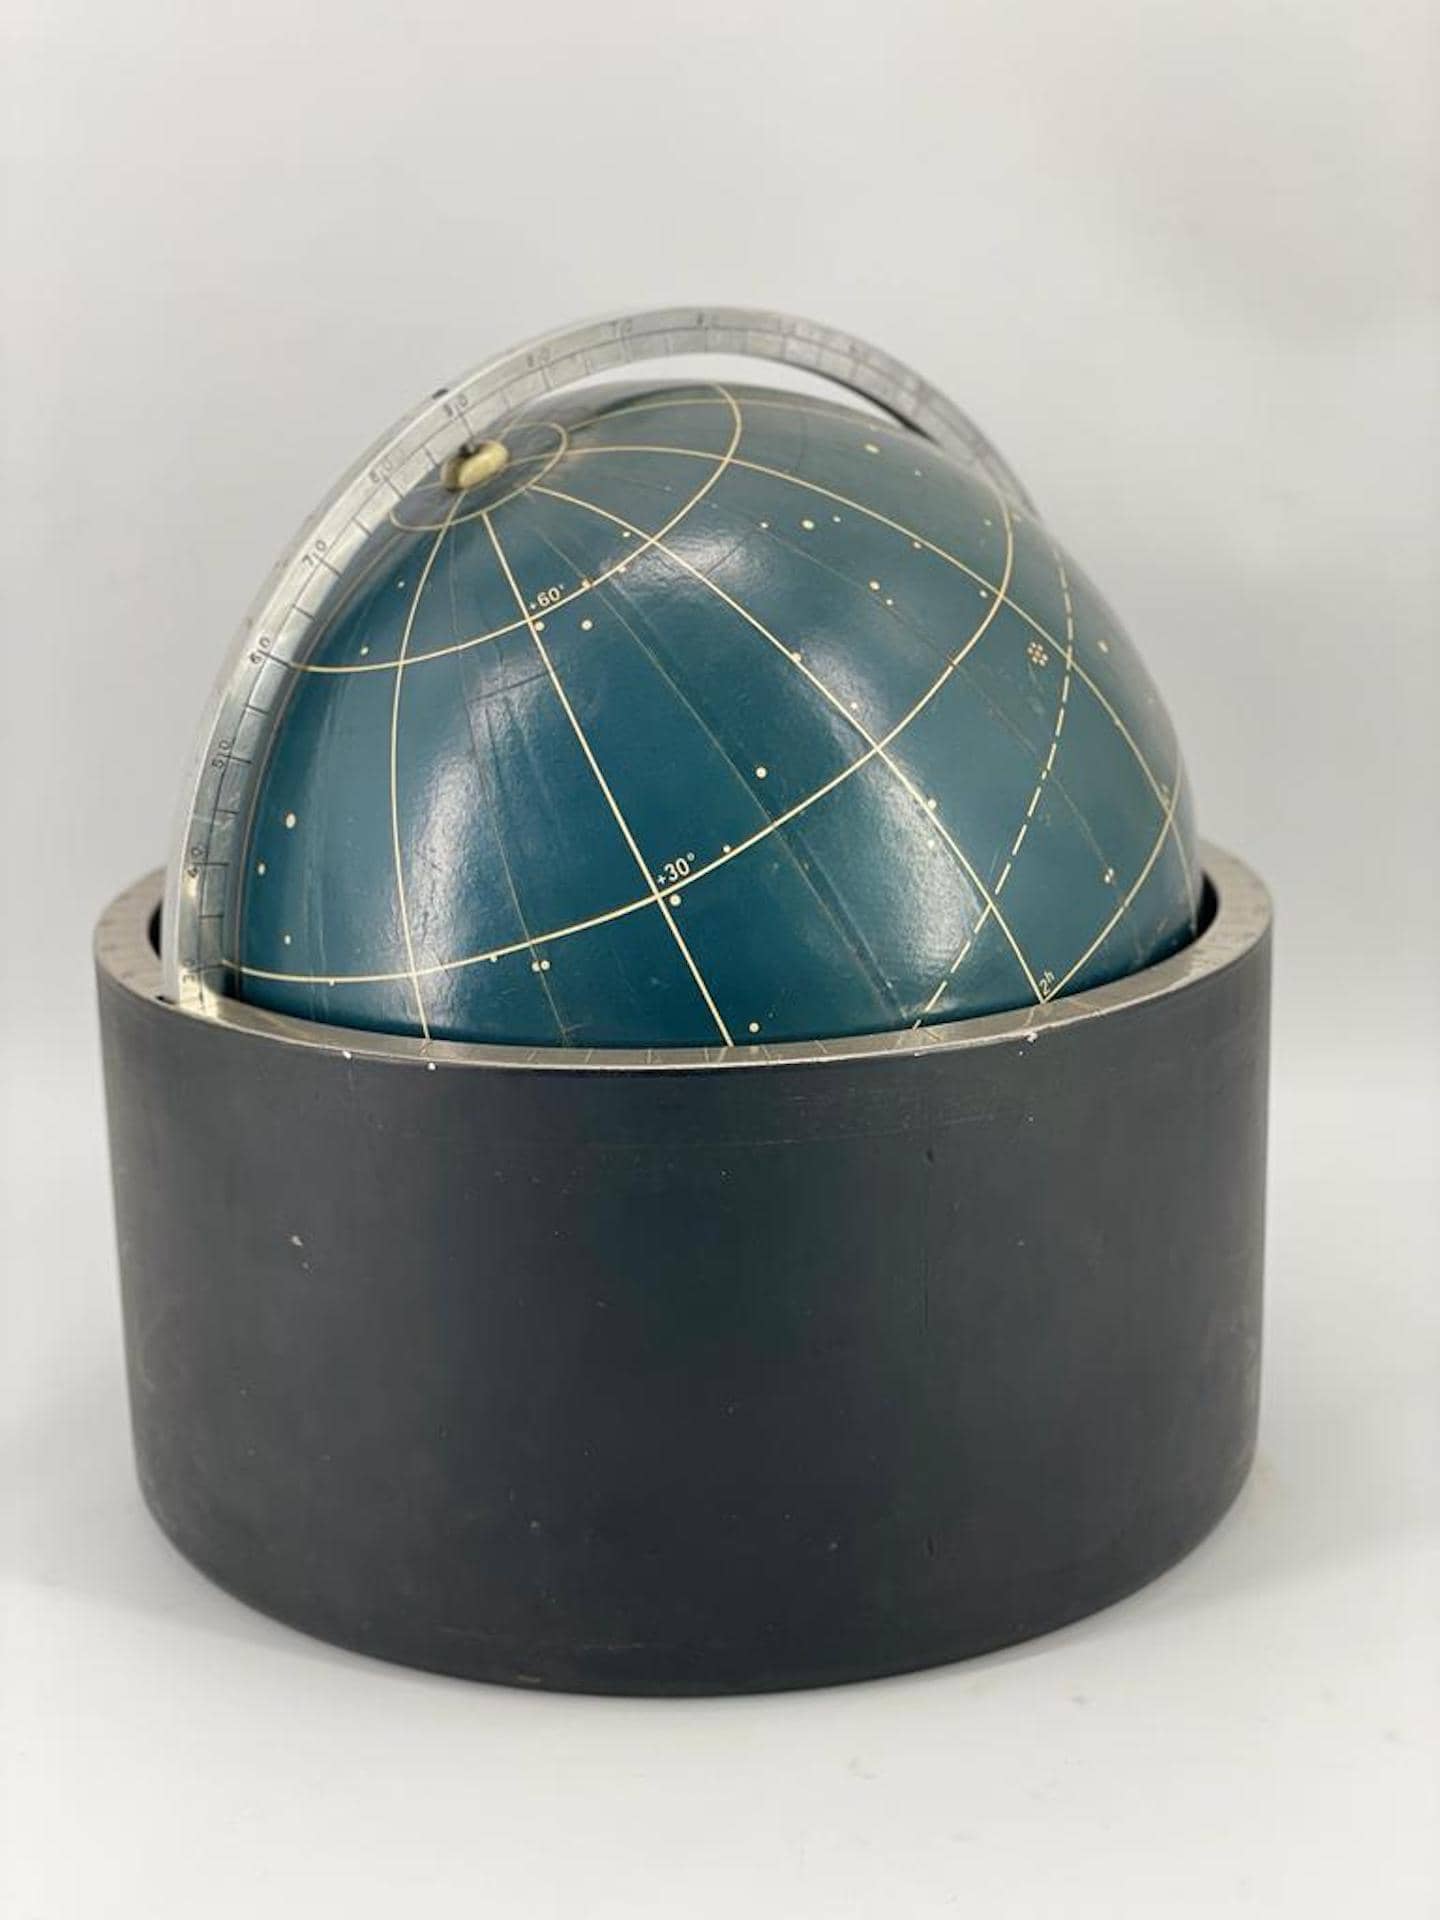 Celestal Globe 1960 made by E.BARTEL